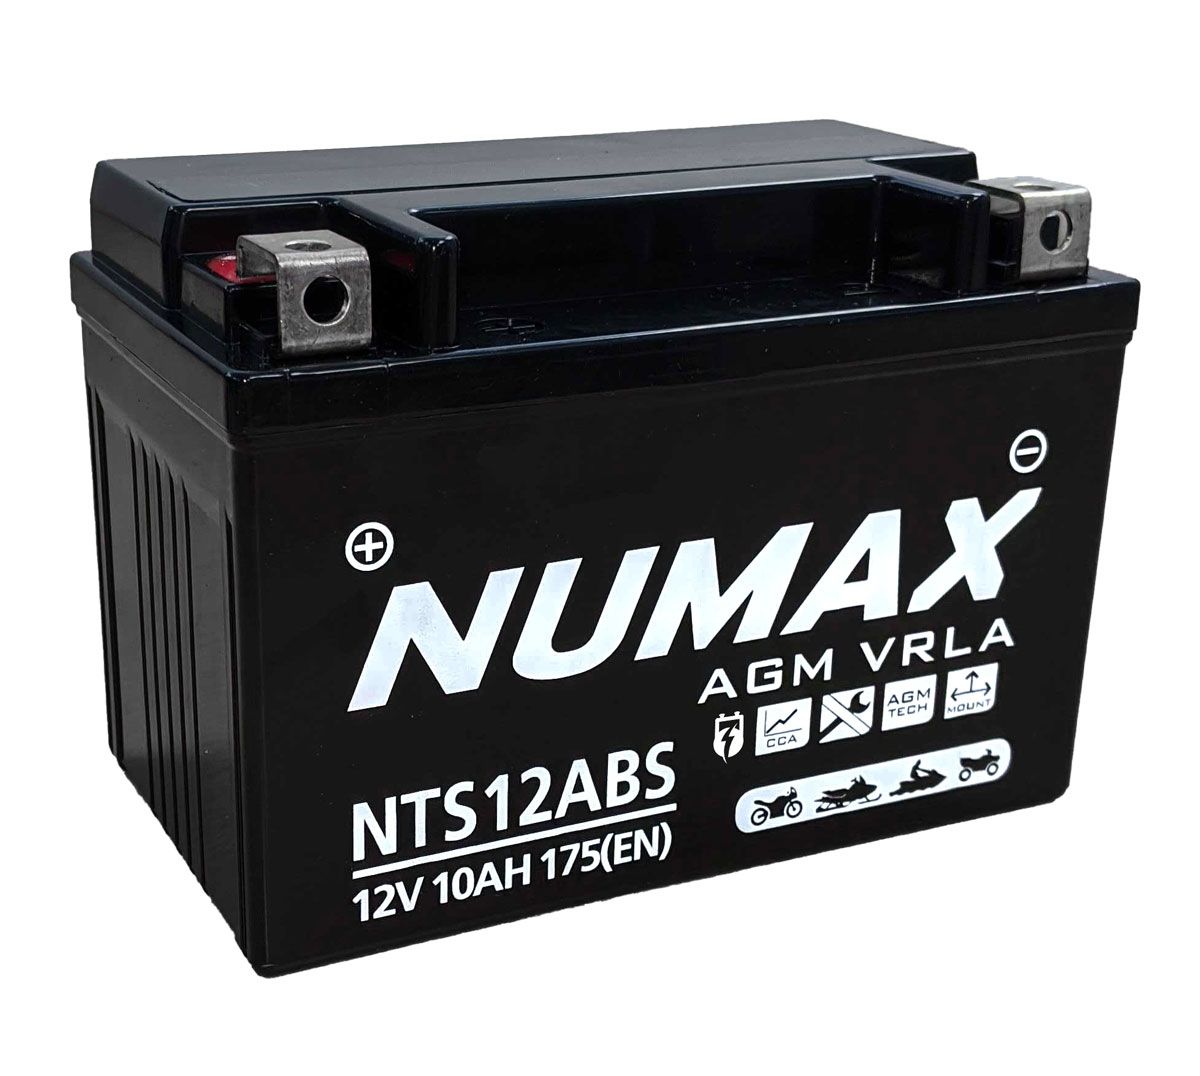 YB7-A Numax Motorcycle Battery 12V 8Ah (YB7A) - GoBatteries